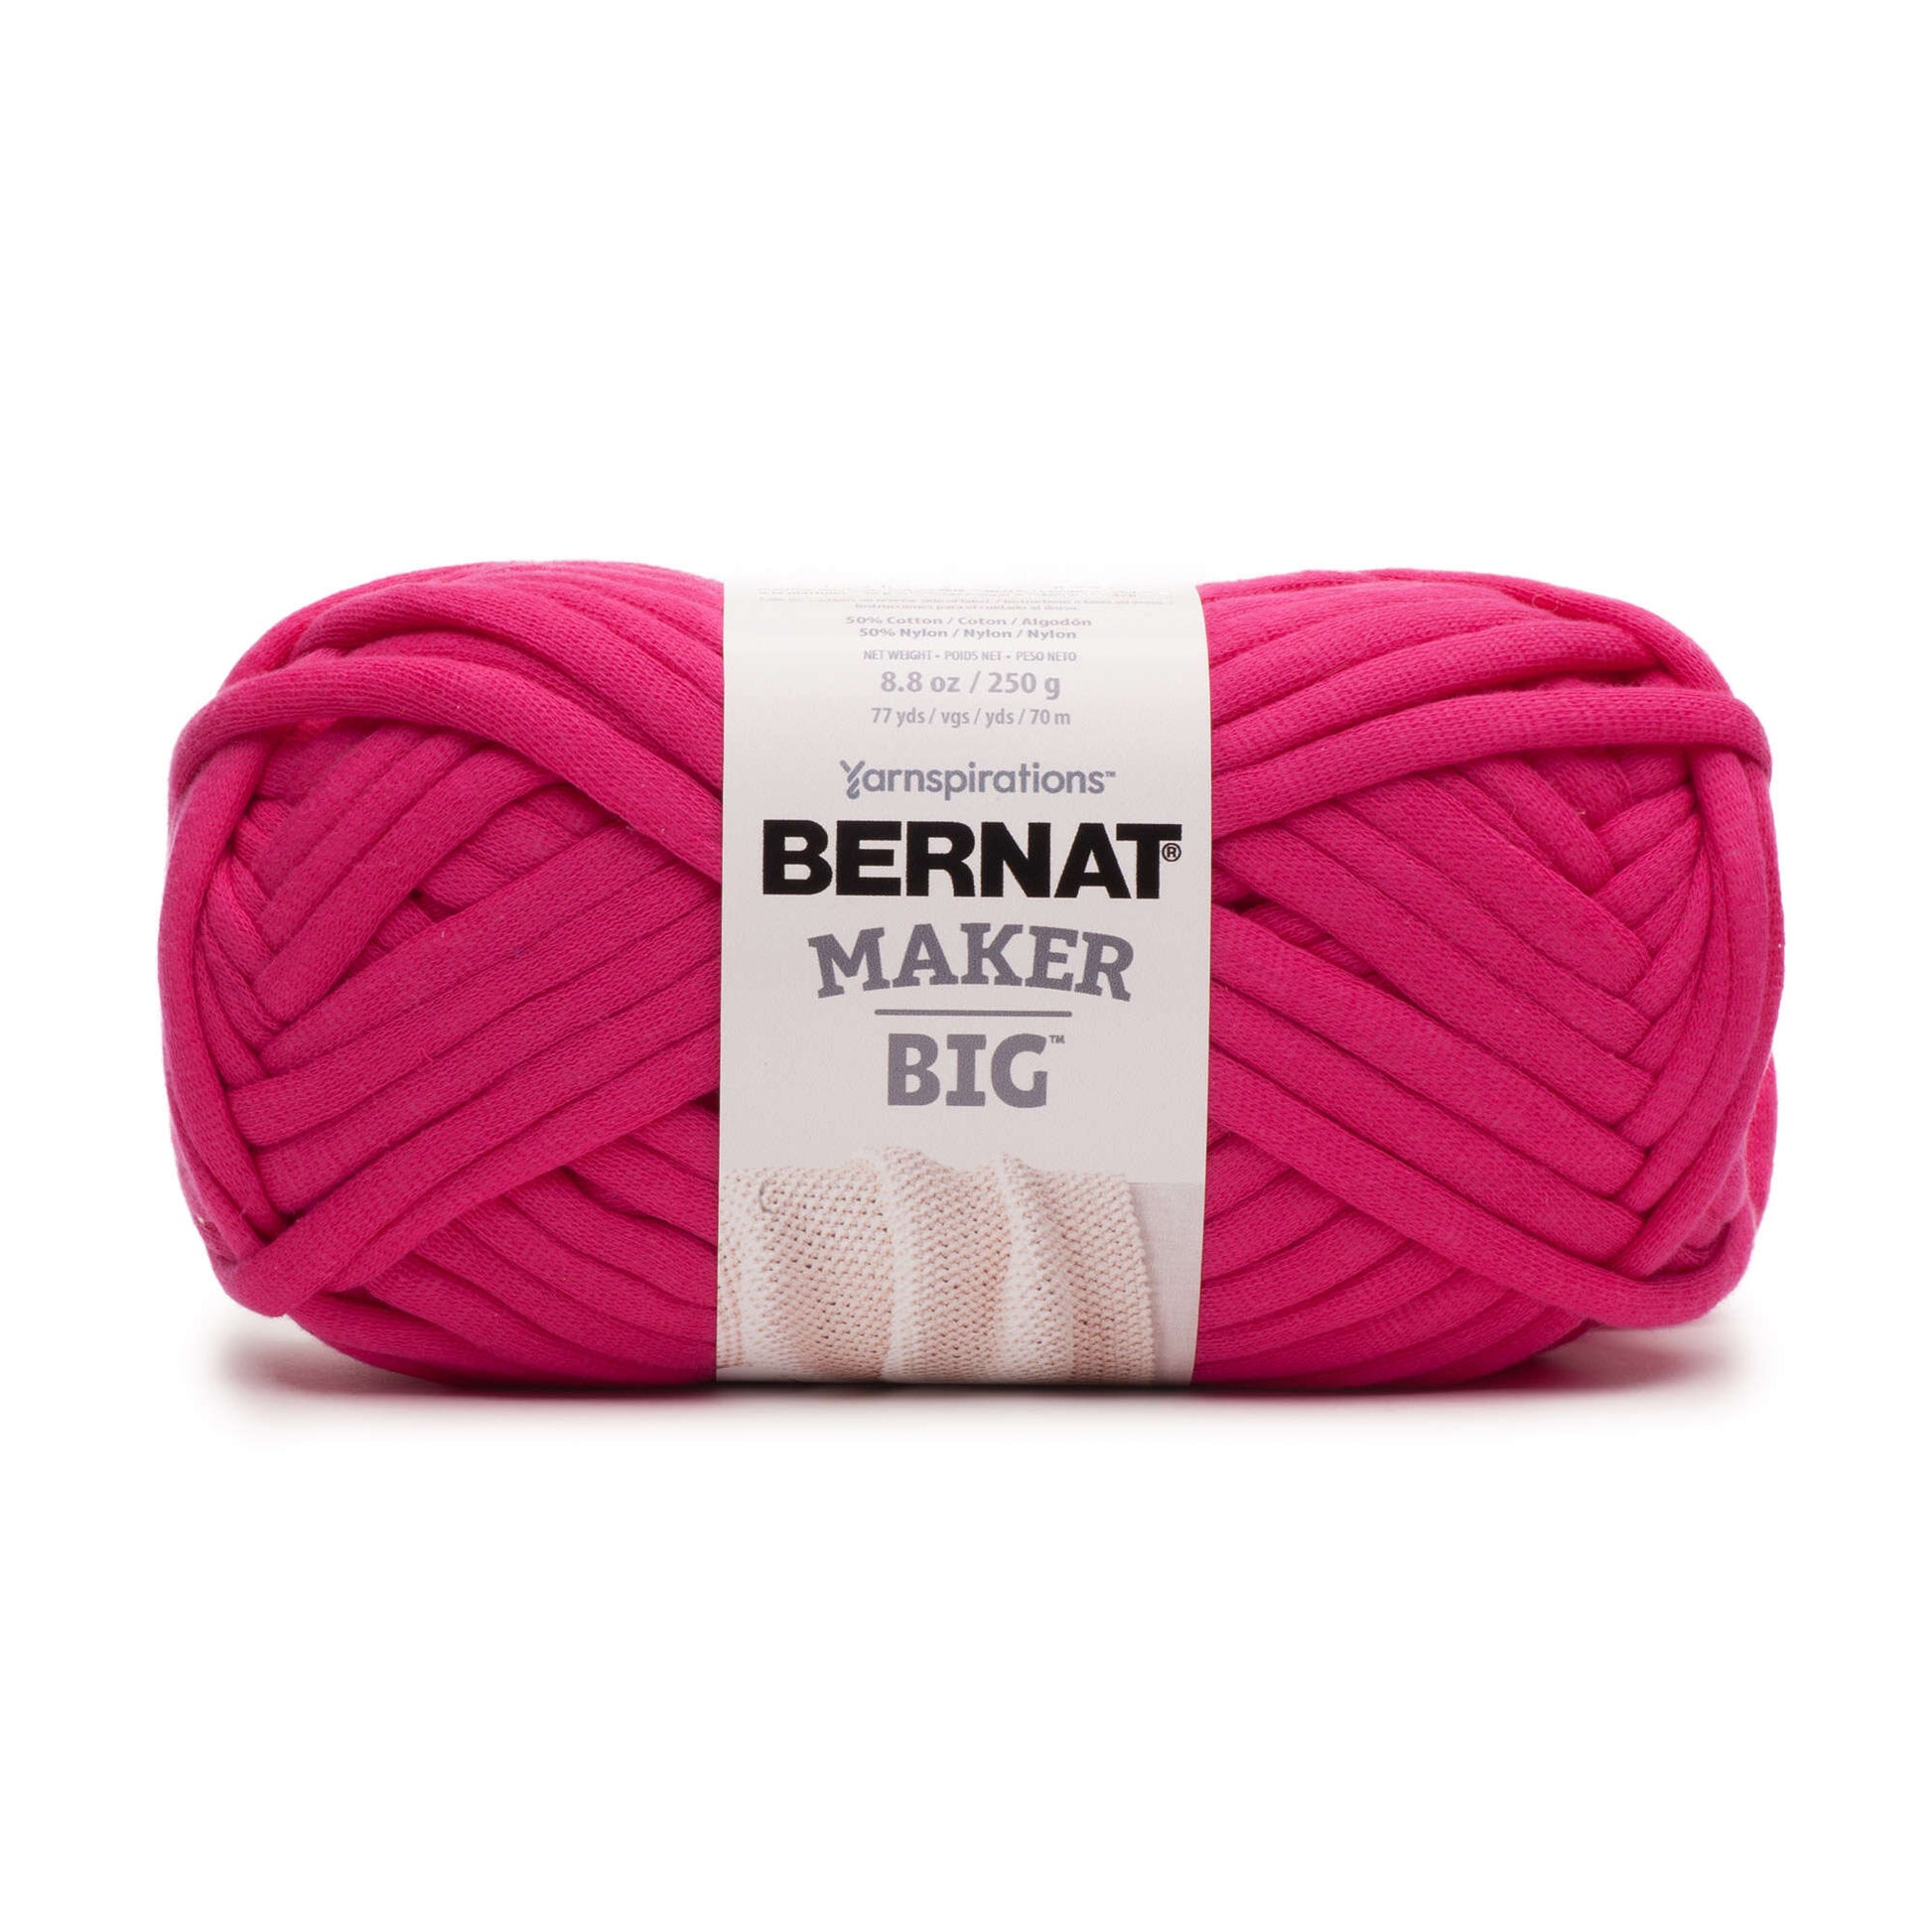 Bernat Maker Big Yarn - Discontinued